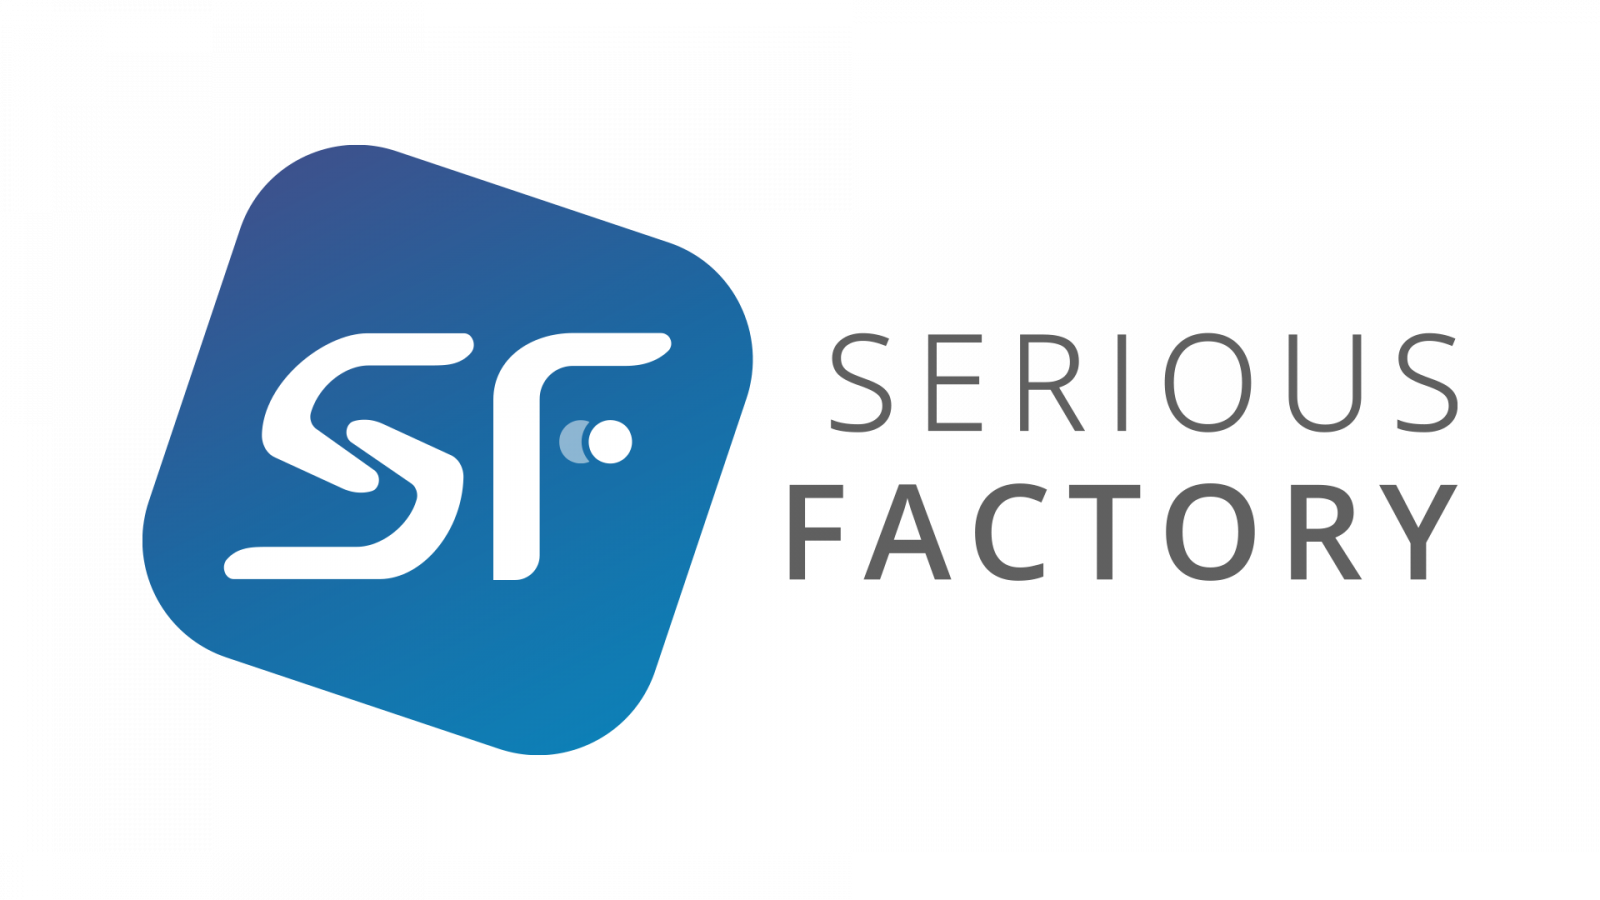 Serious factory logo